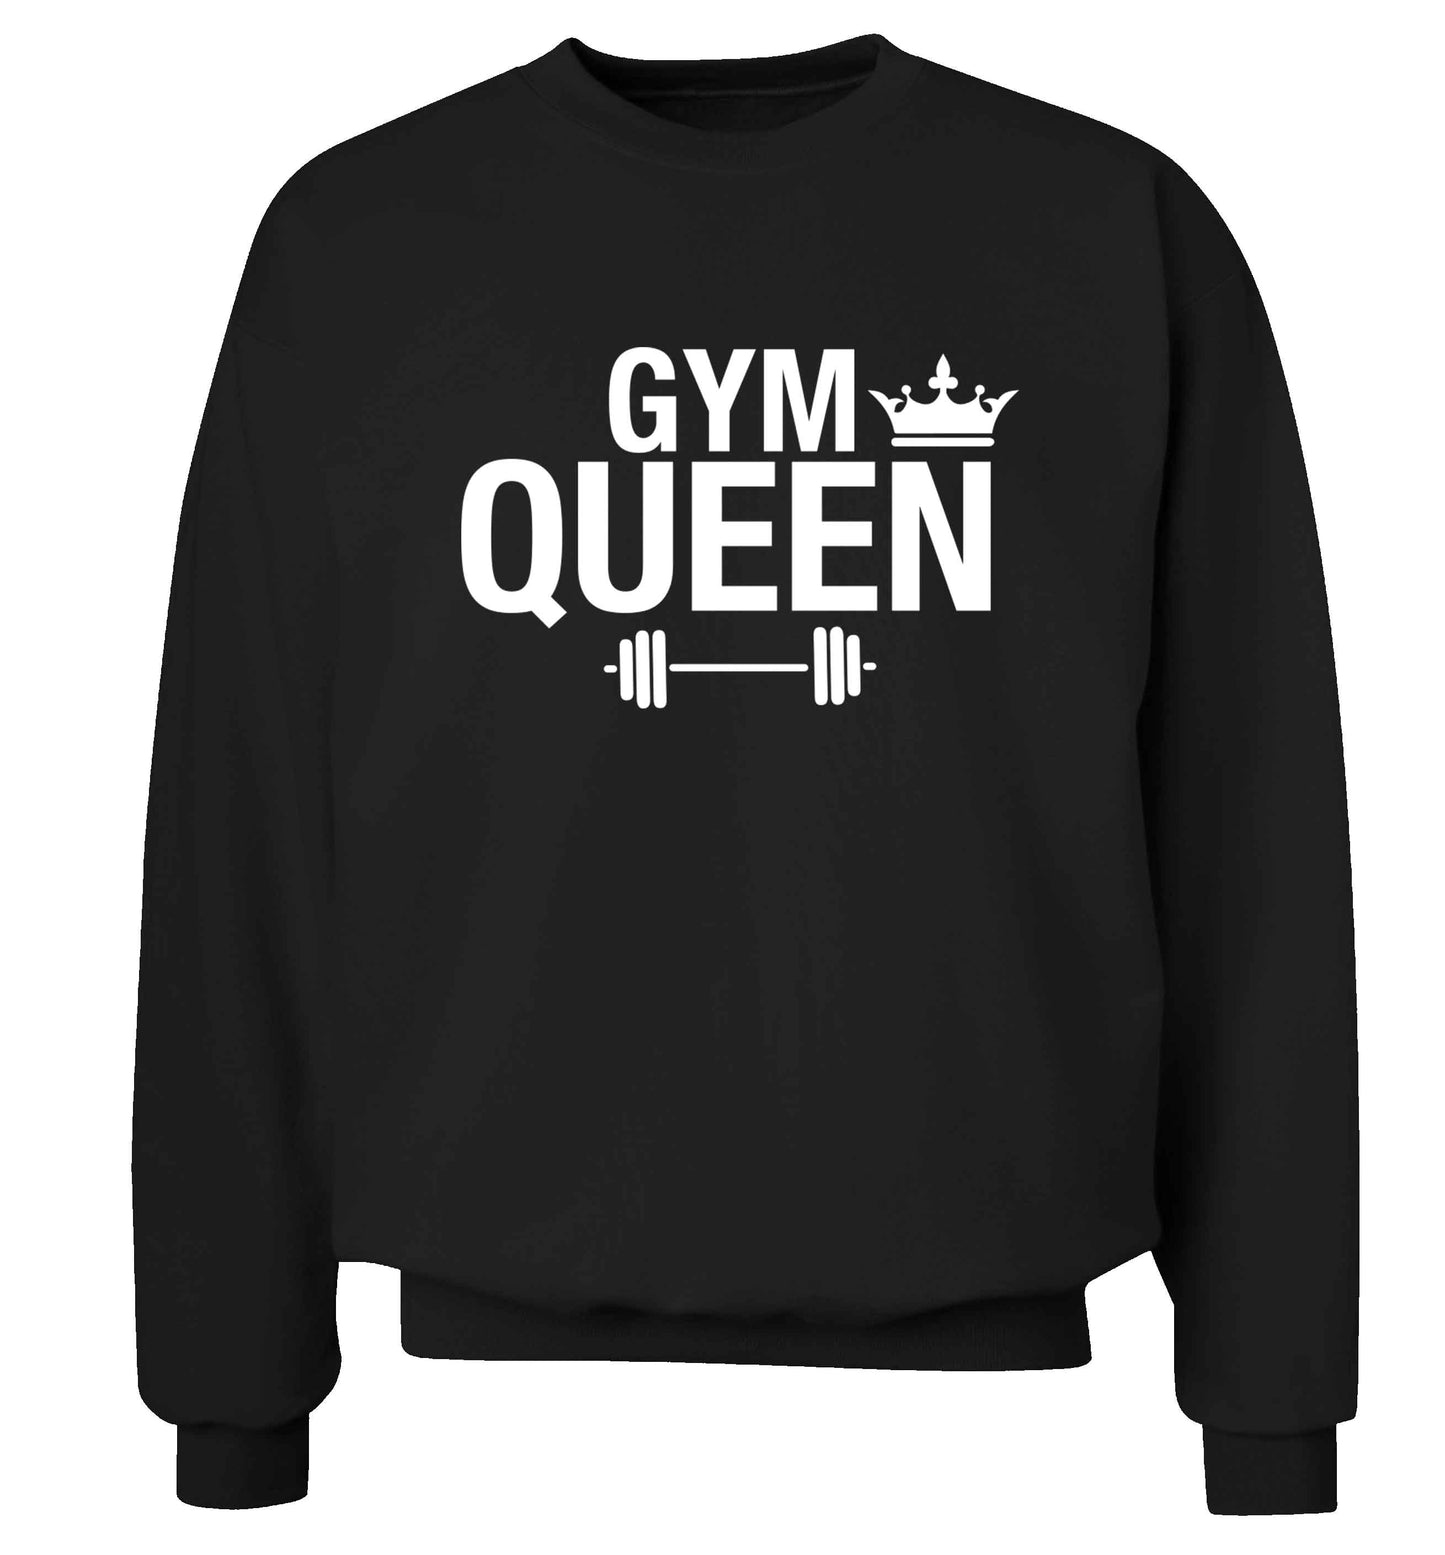 Gym queen Adult's unisex black Sweater 2XL